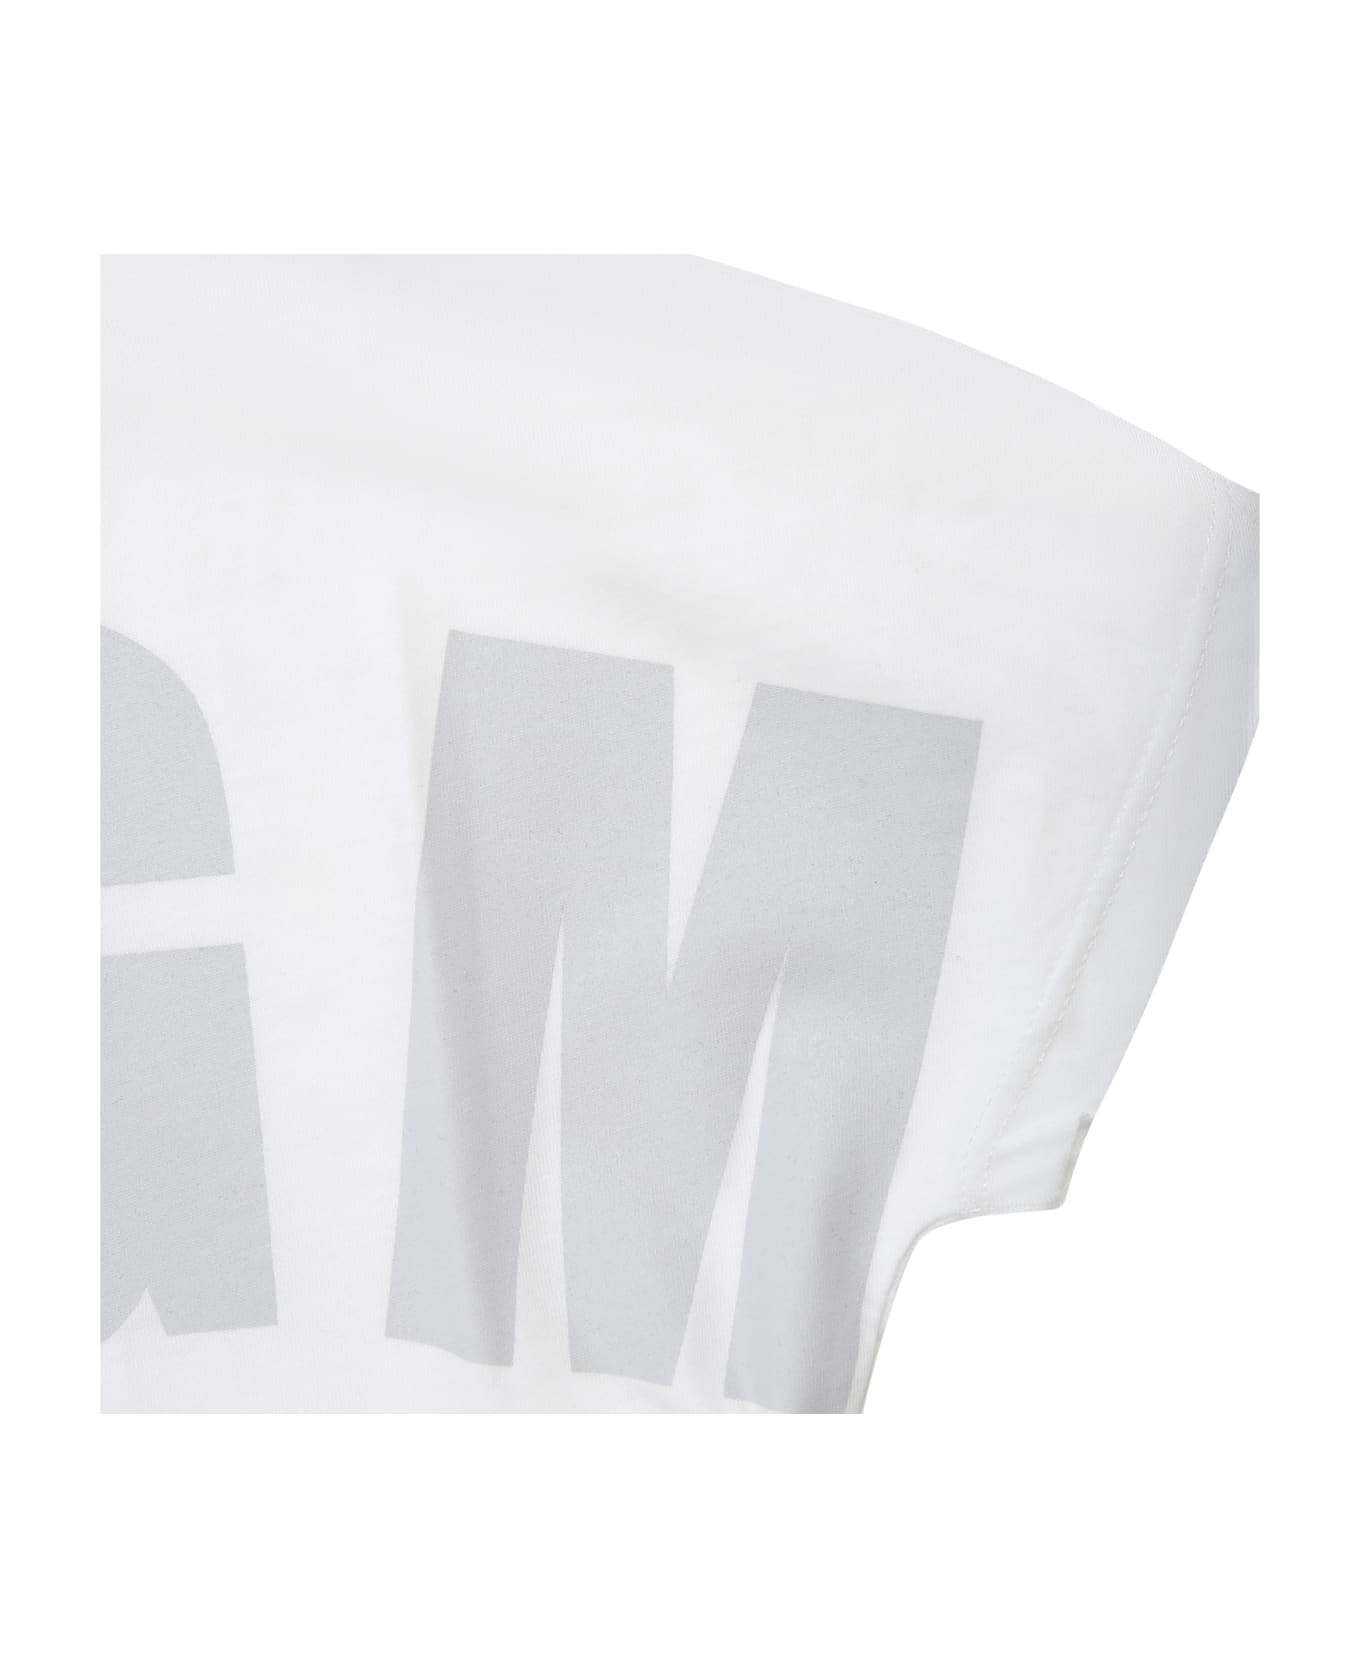 MSGM White T-shirt For Kids With Logo - White